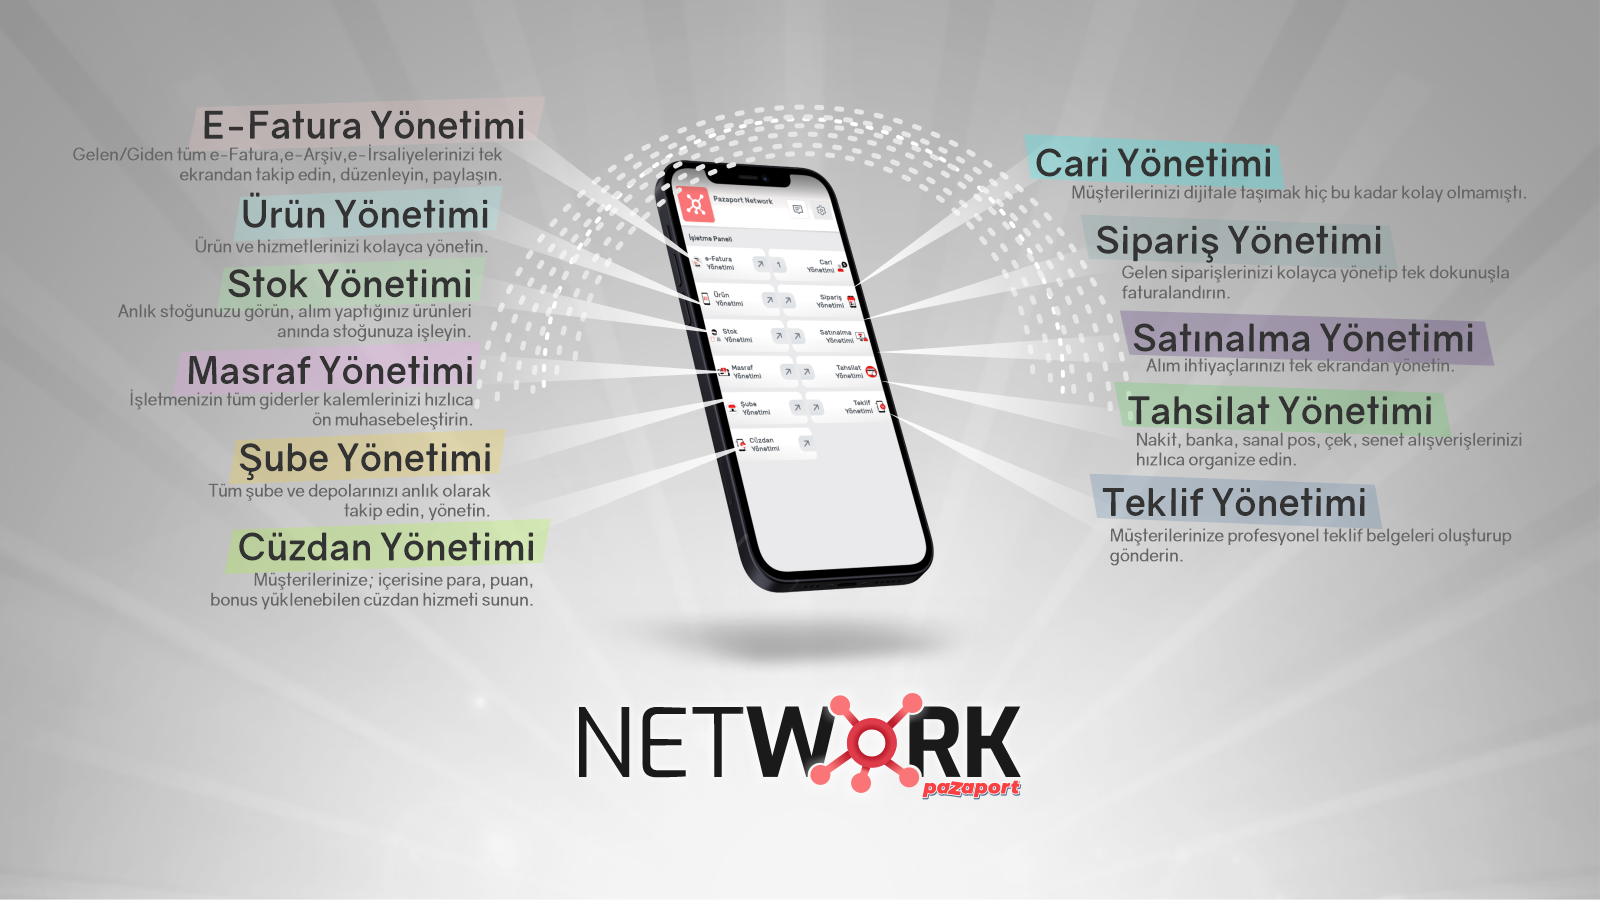 Pazaport Network